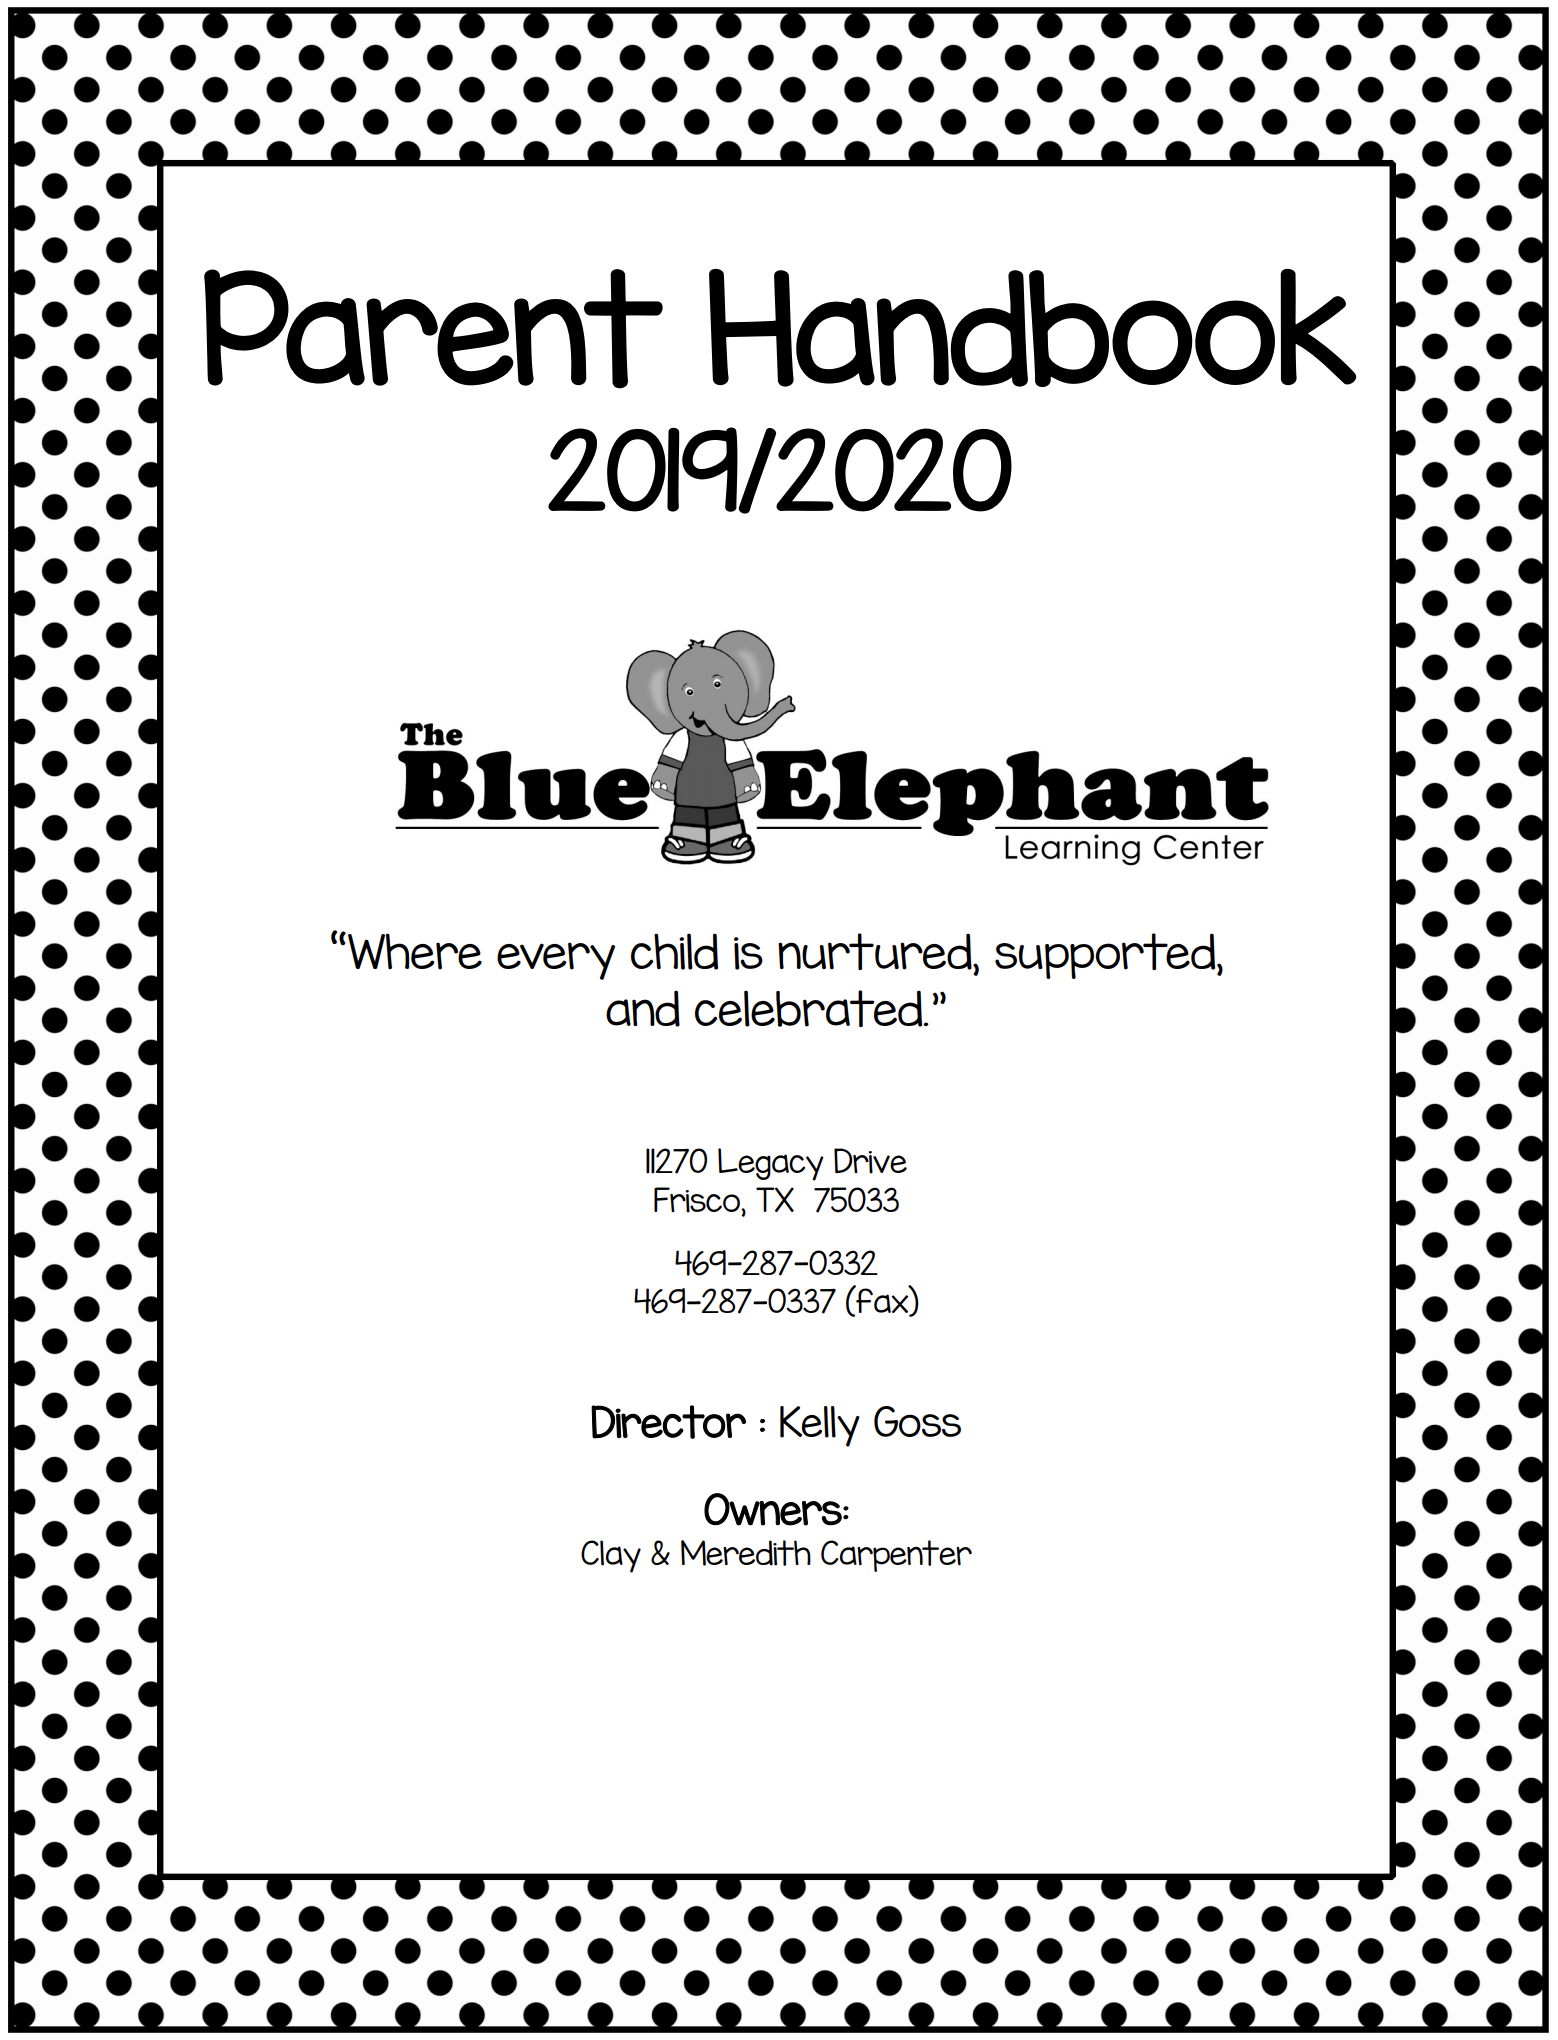 Parents Handbook